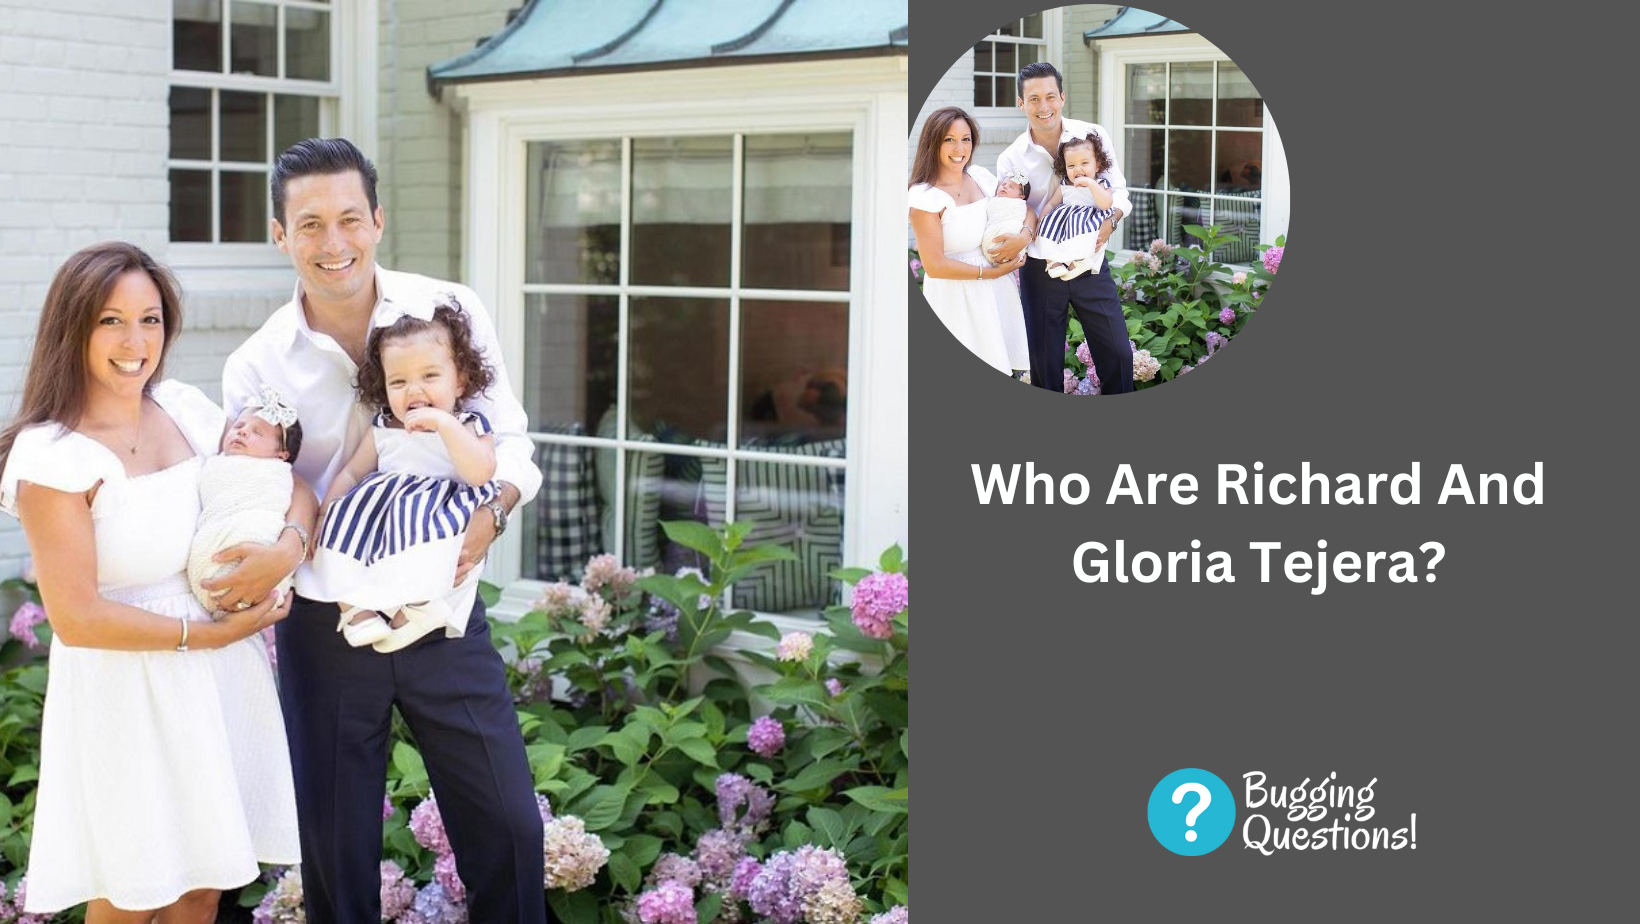 Who Are Richard And Gloria Tejera?